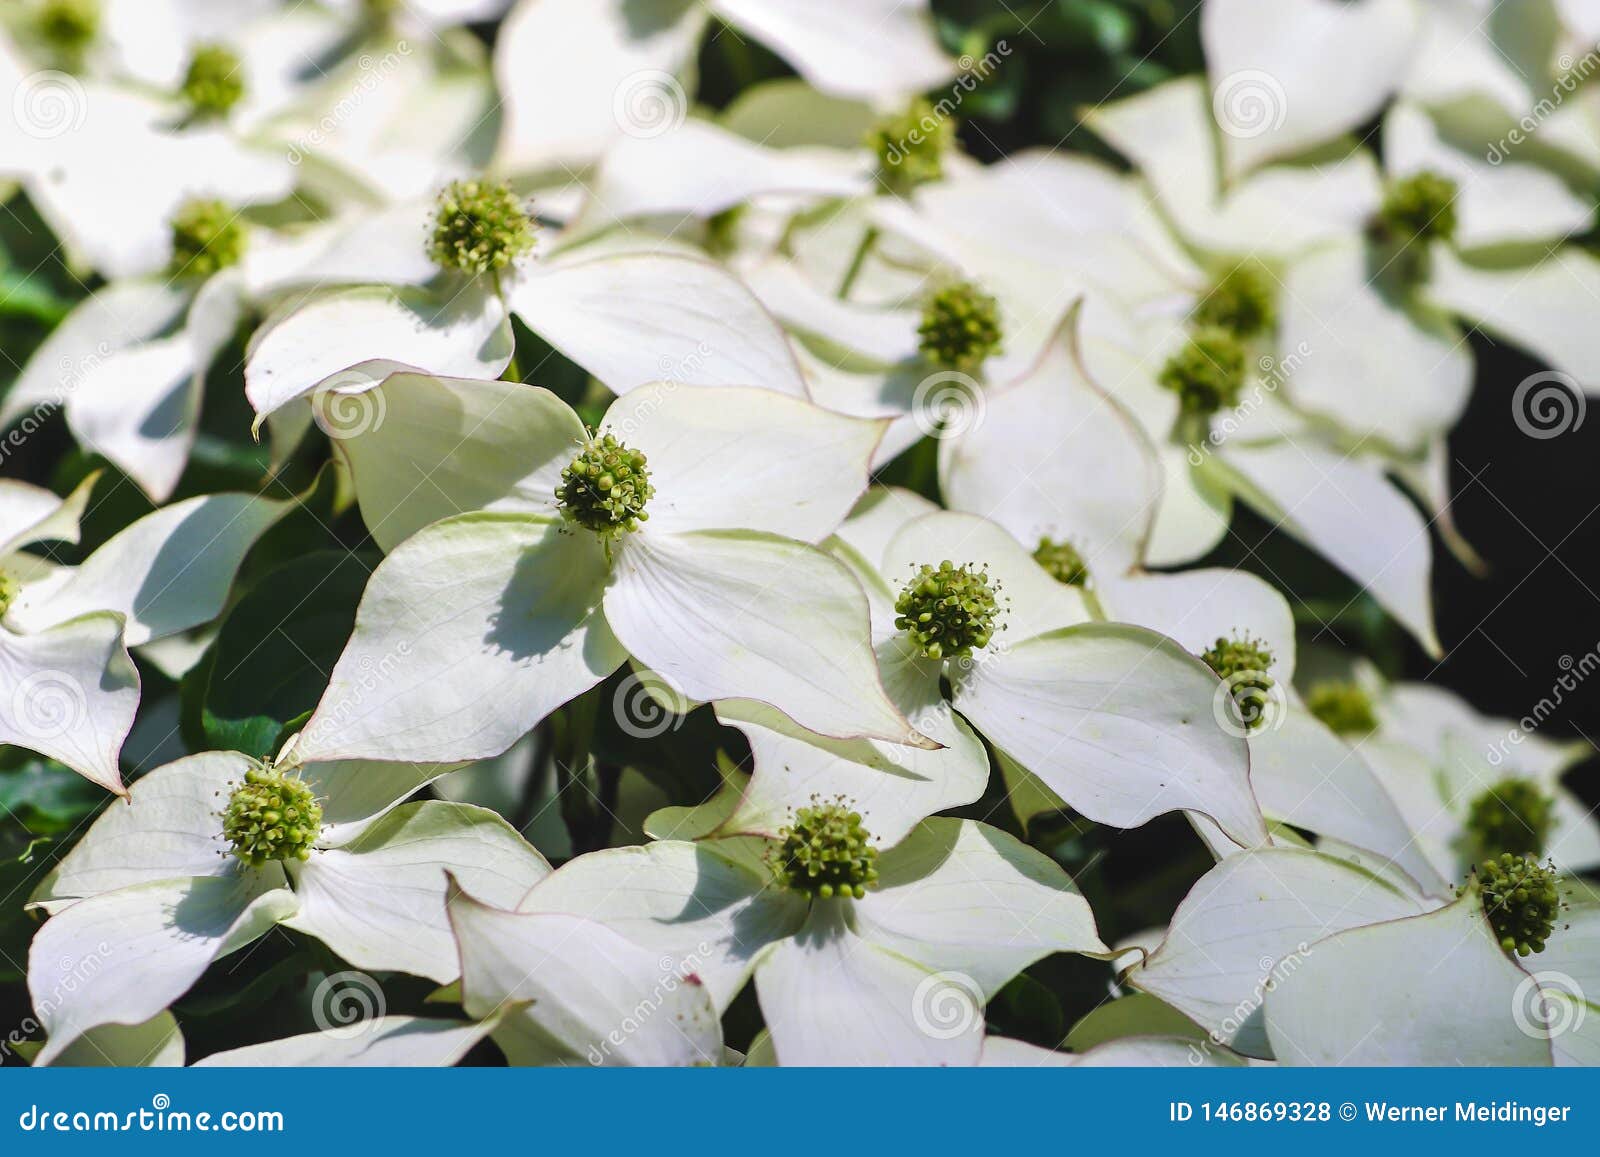 white pseudoflowers and green flowers of the chinese dogwood, asian dogwood, cornus kousa